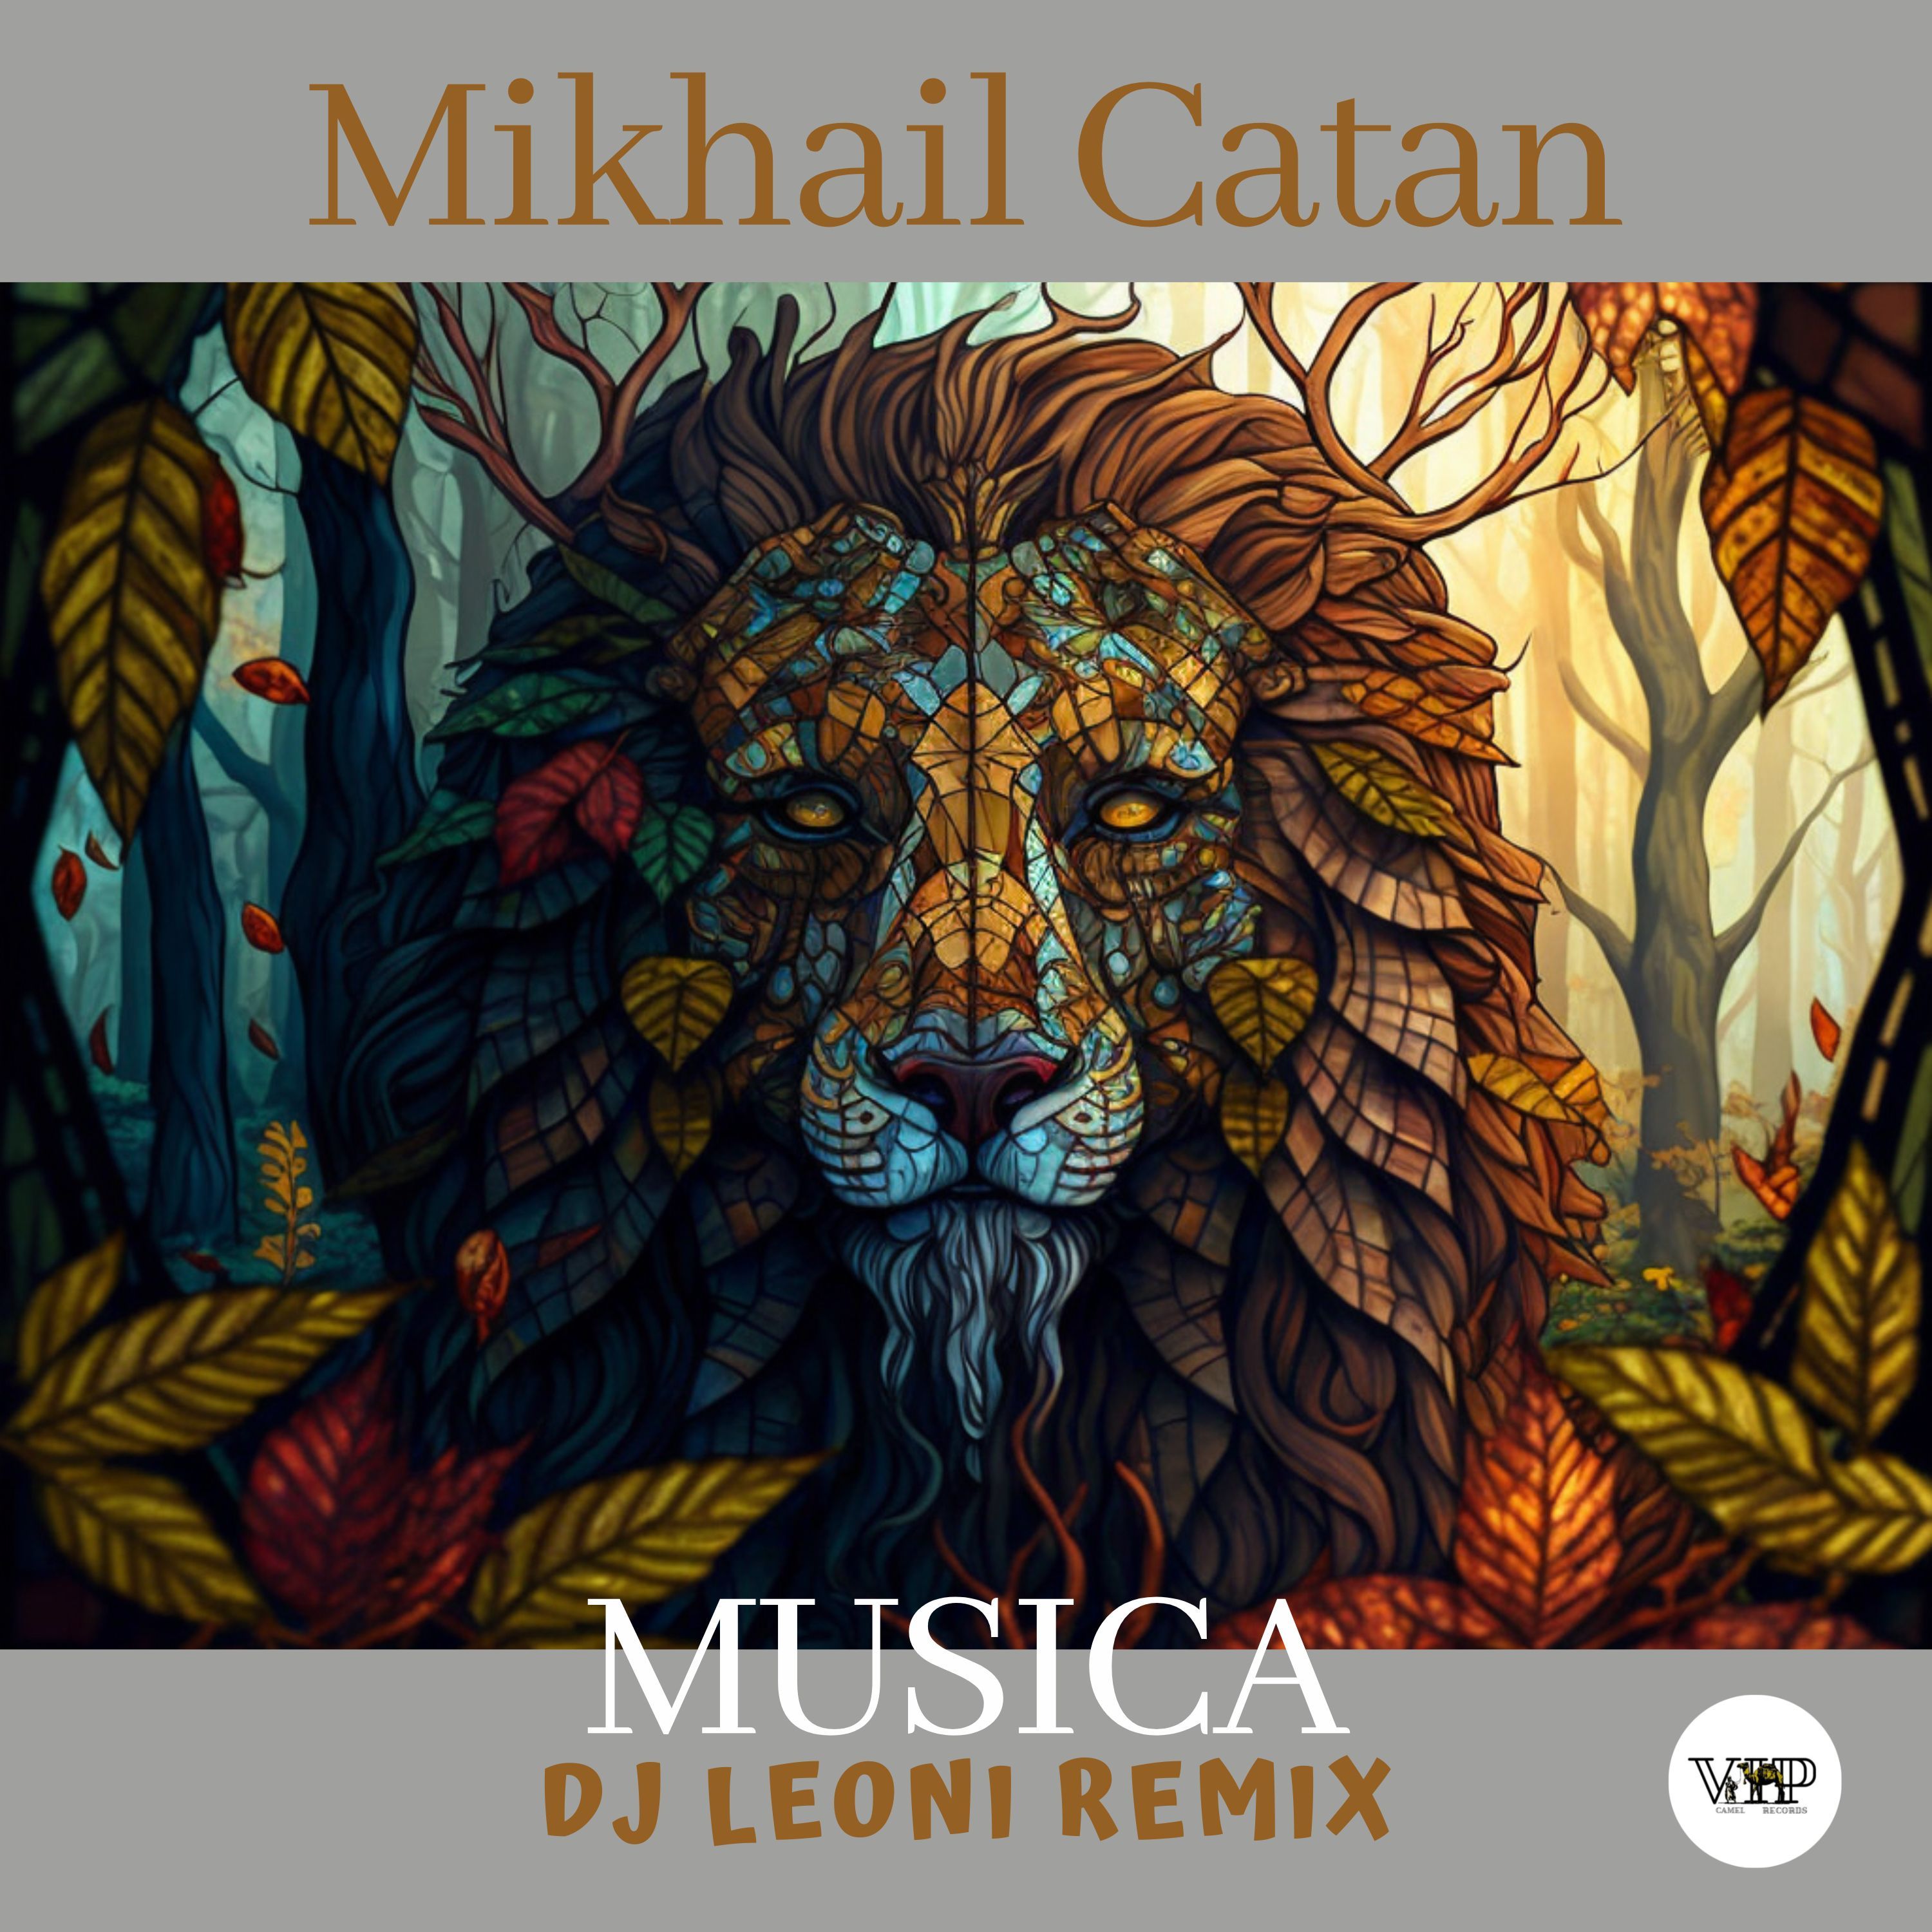 Mikhail Catan - Musica (Dj Leoni Remix) Camel Vip Records